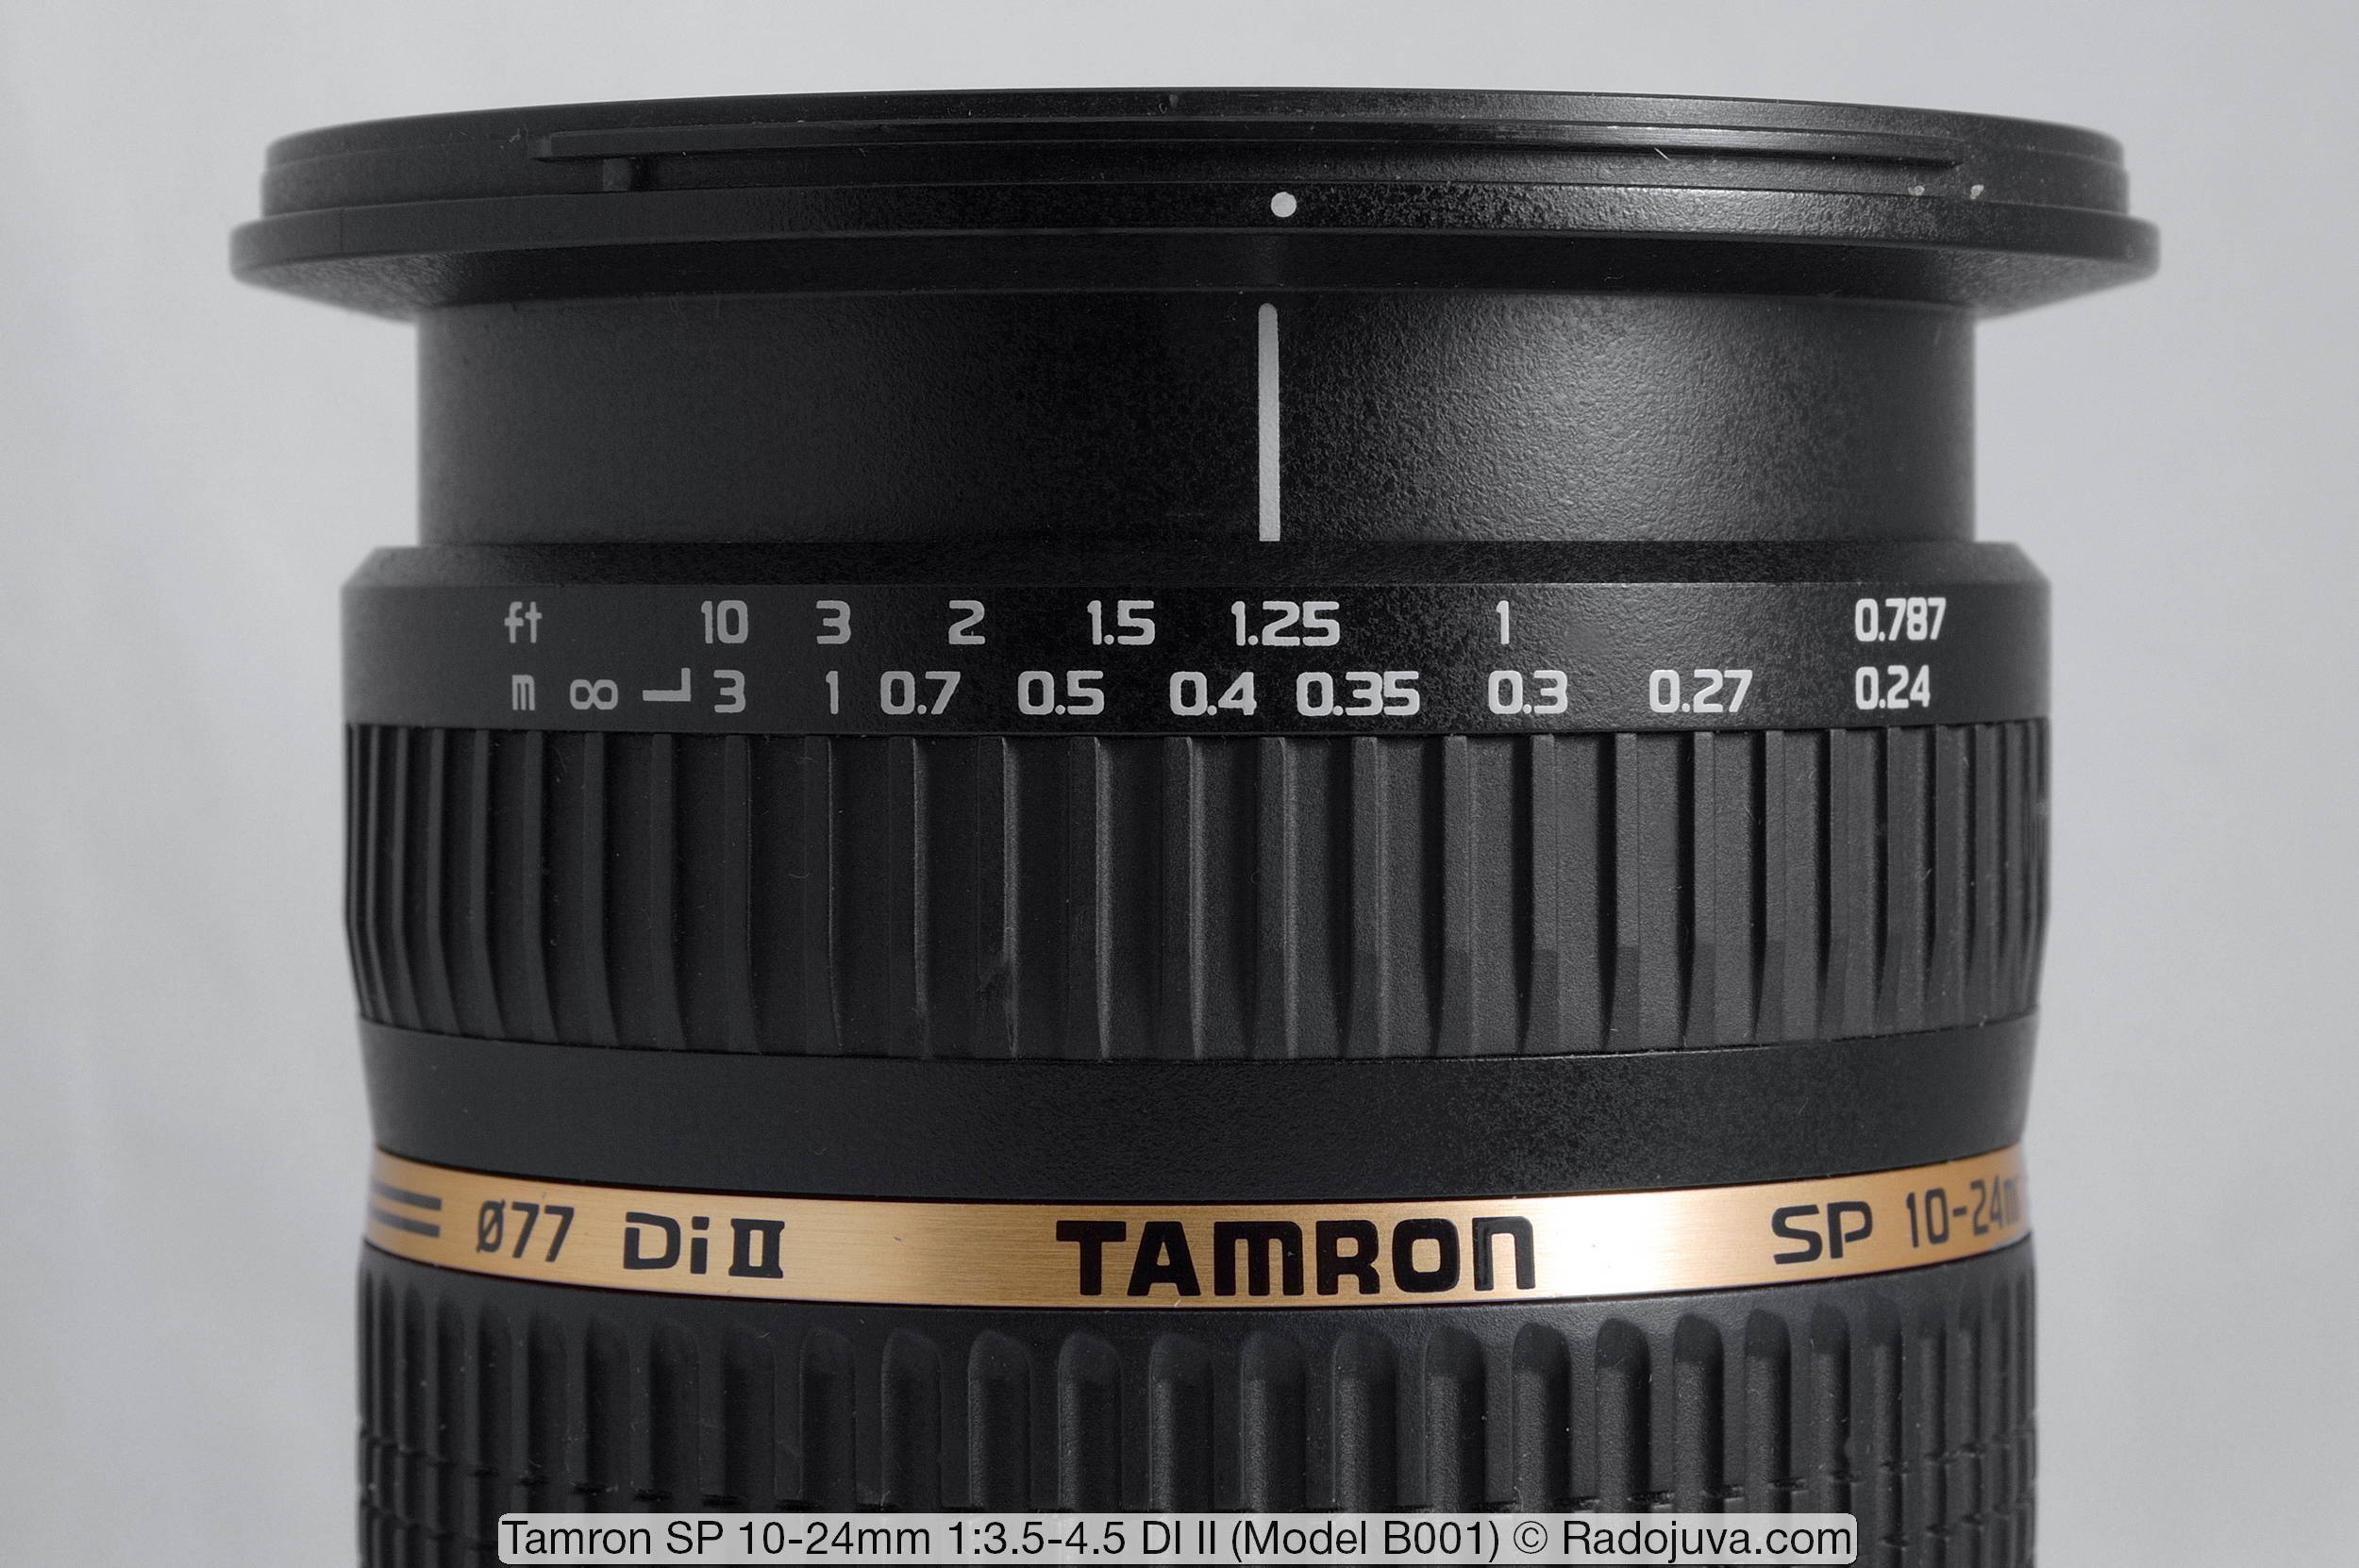 Tamron SP 10-24mm 1:3.5-4.5 DI II (Model B001)